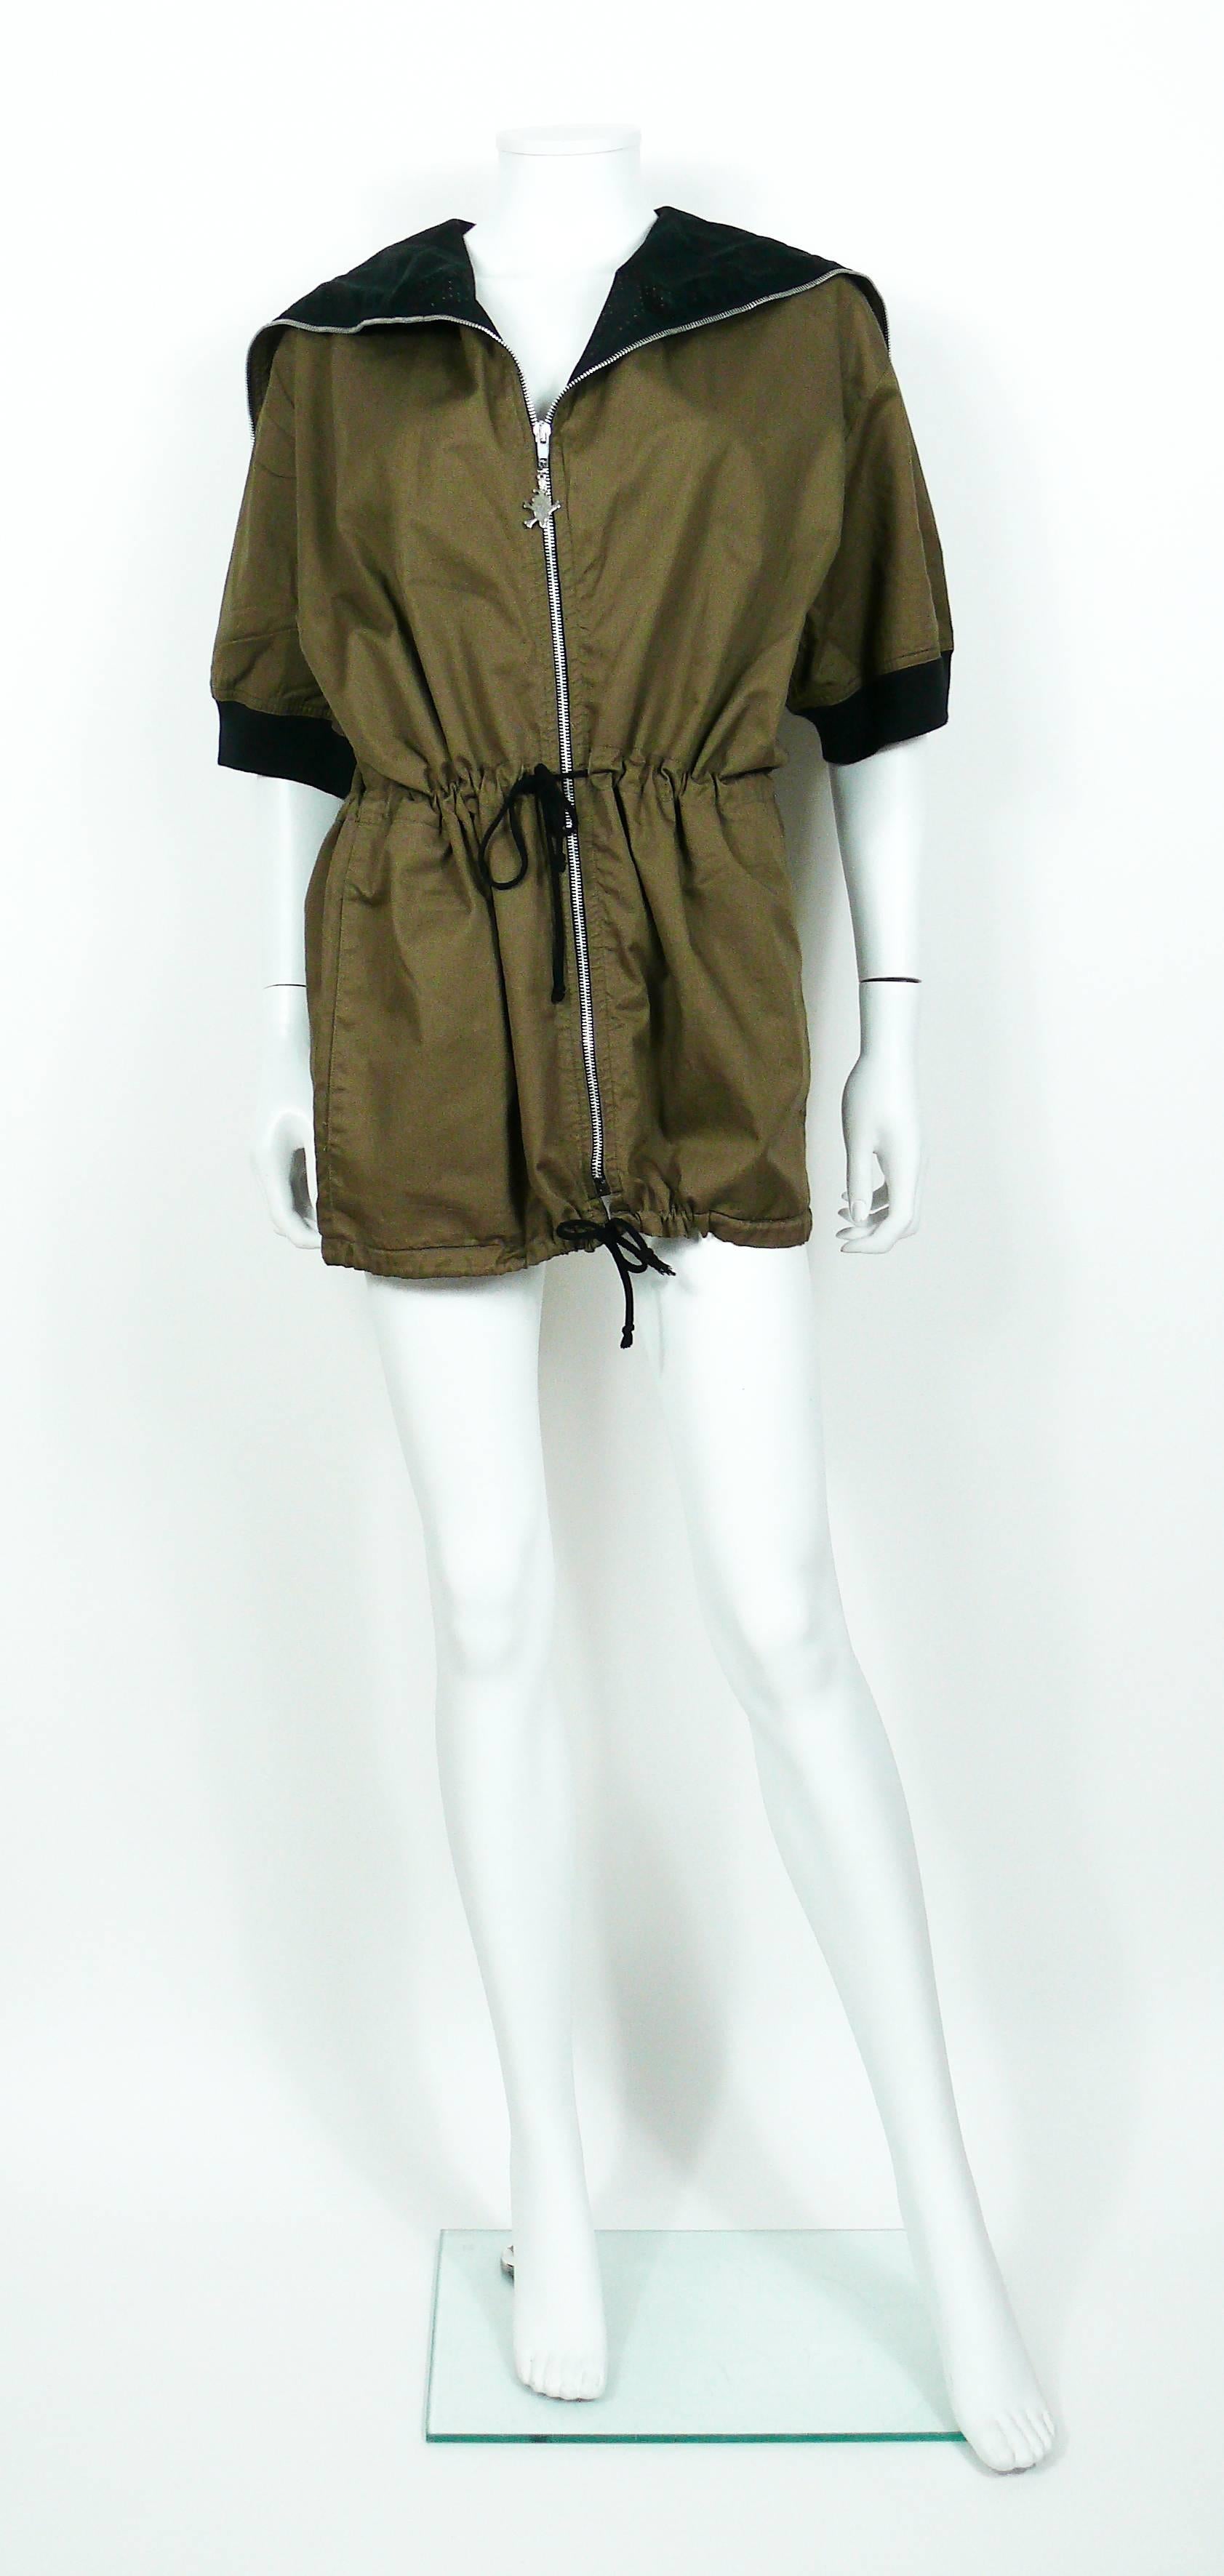 JEAN PAUL GAULTIER vintage cotton anorak jacket.

This jacket features :
- Large 